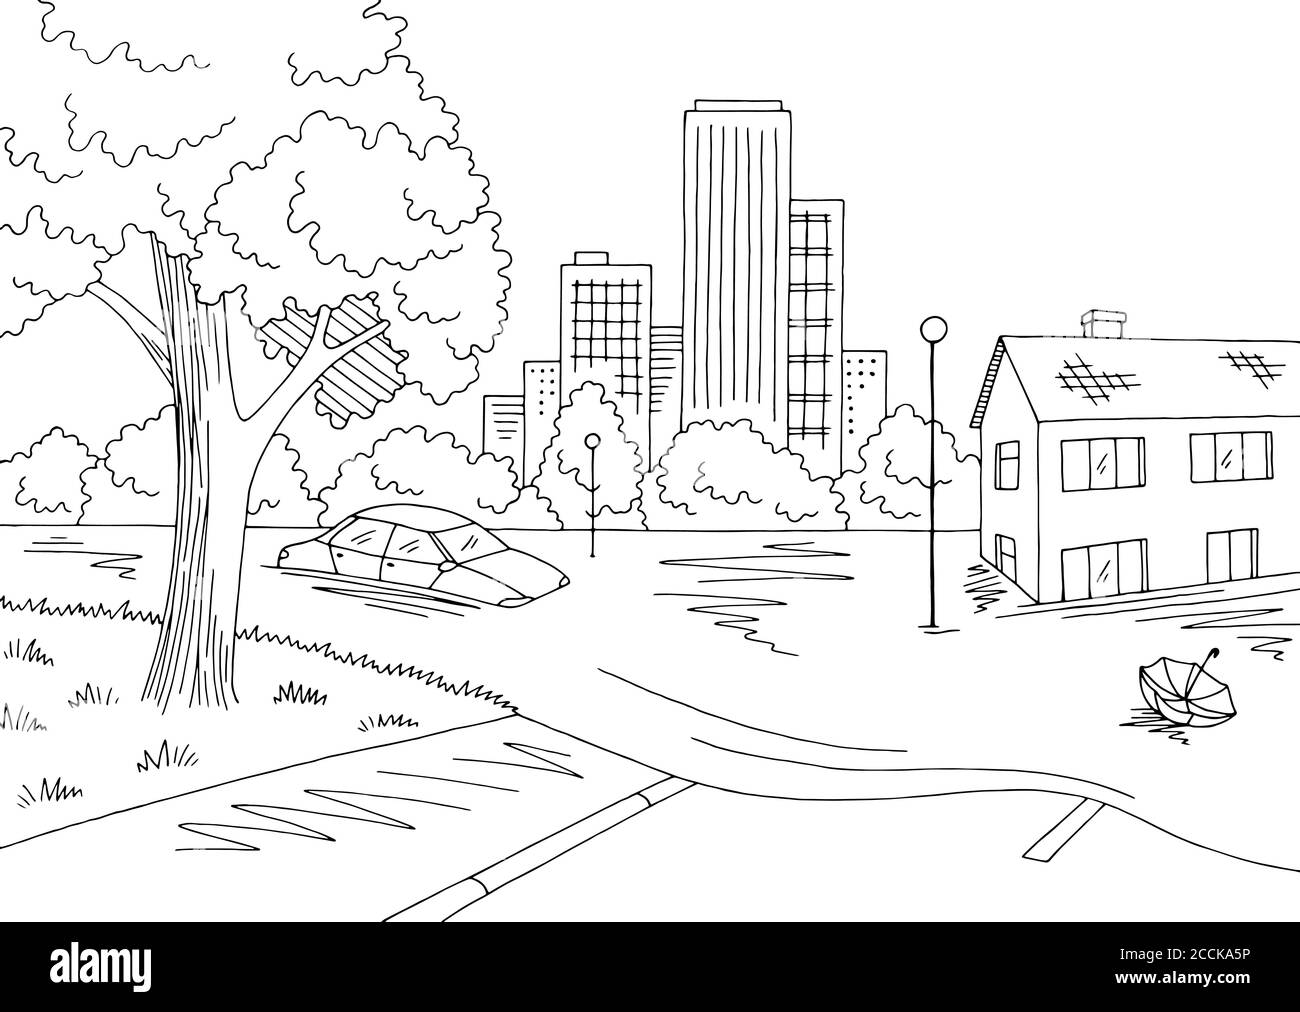 Flood graphic black white landscape city sketch illustration vector Stock Vector